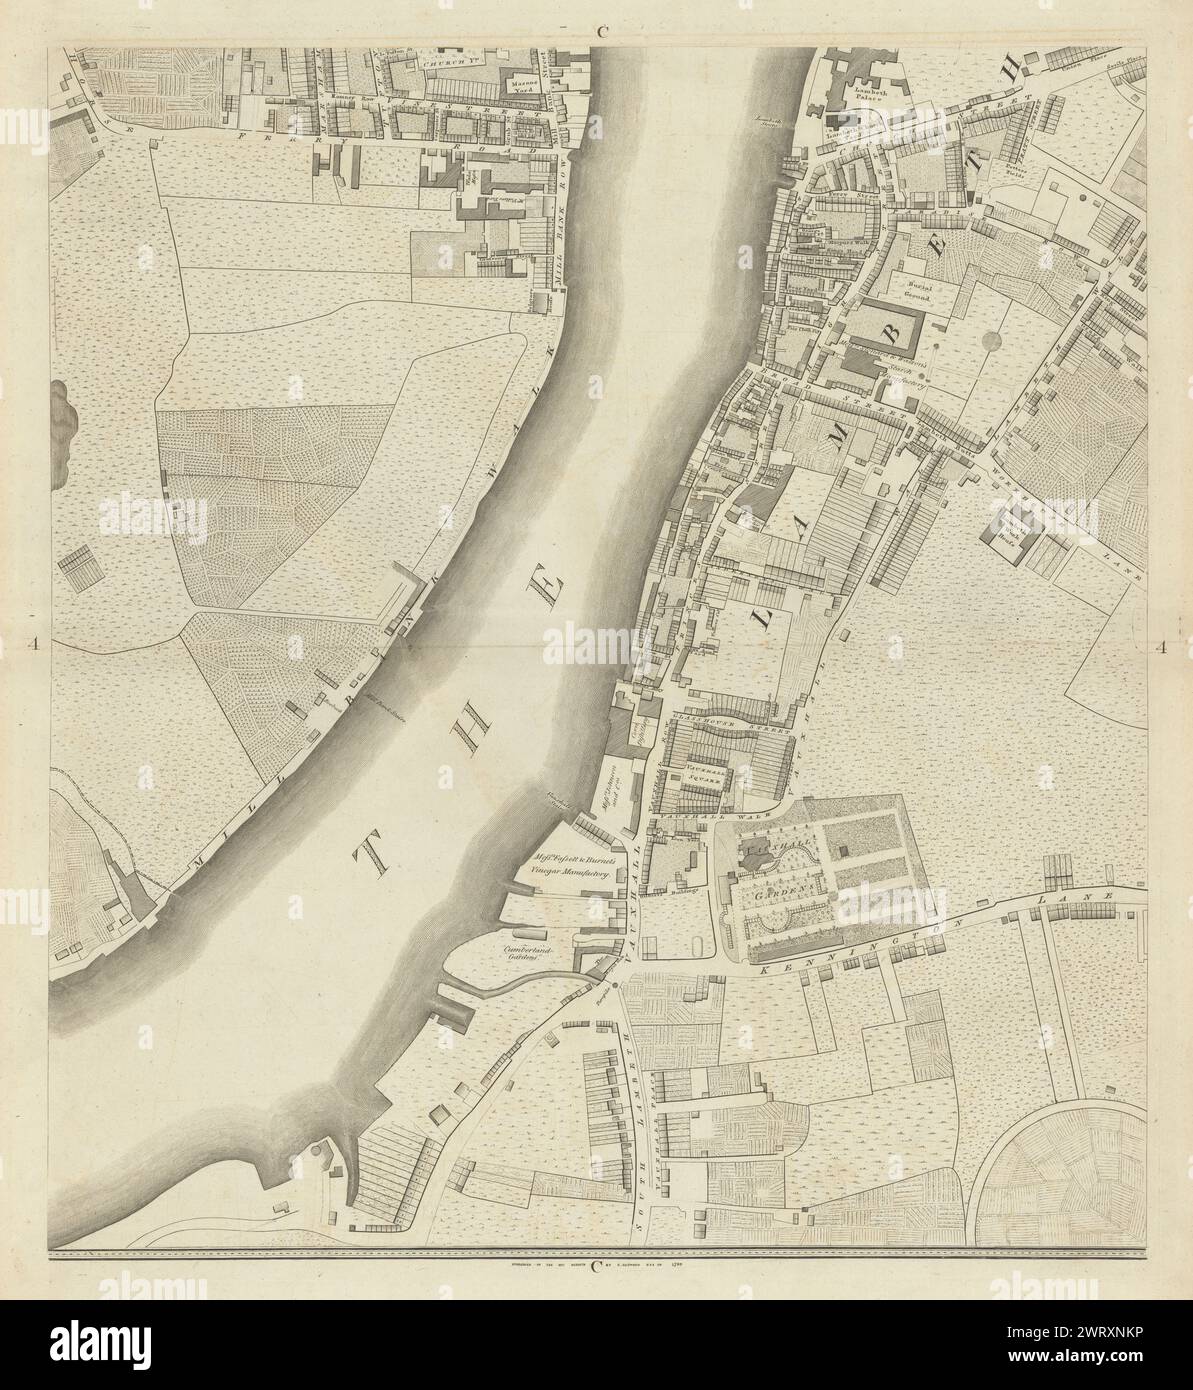 Horwood London C4 Westminster Millbank Vauxhall Lambeth Oval 1799 vecchia mappa Foto Stock